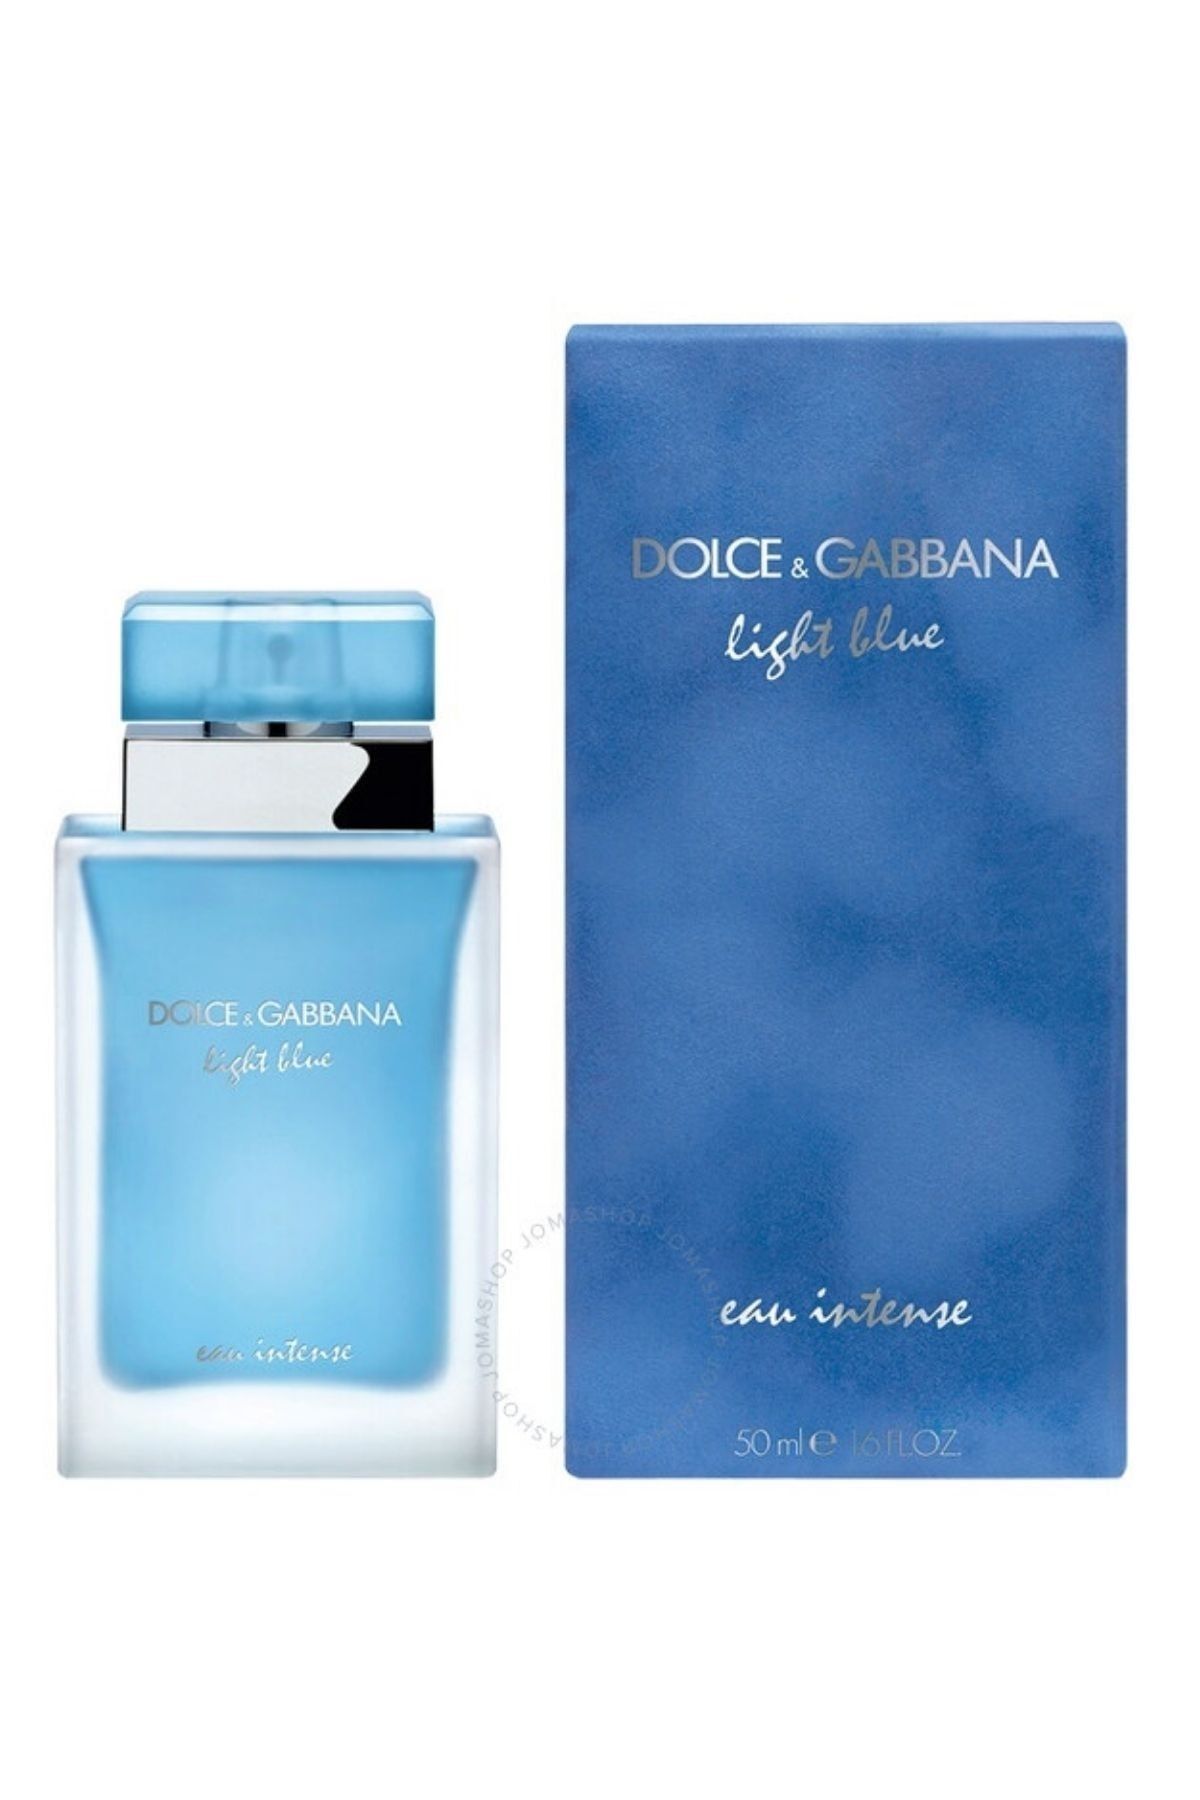 Dolce&Gabbana Dolce Gabbana Light Blue Eau Intense Edp 50 Ml